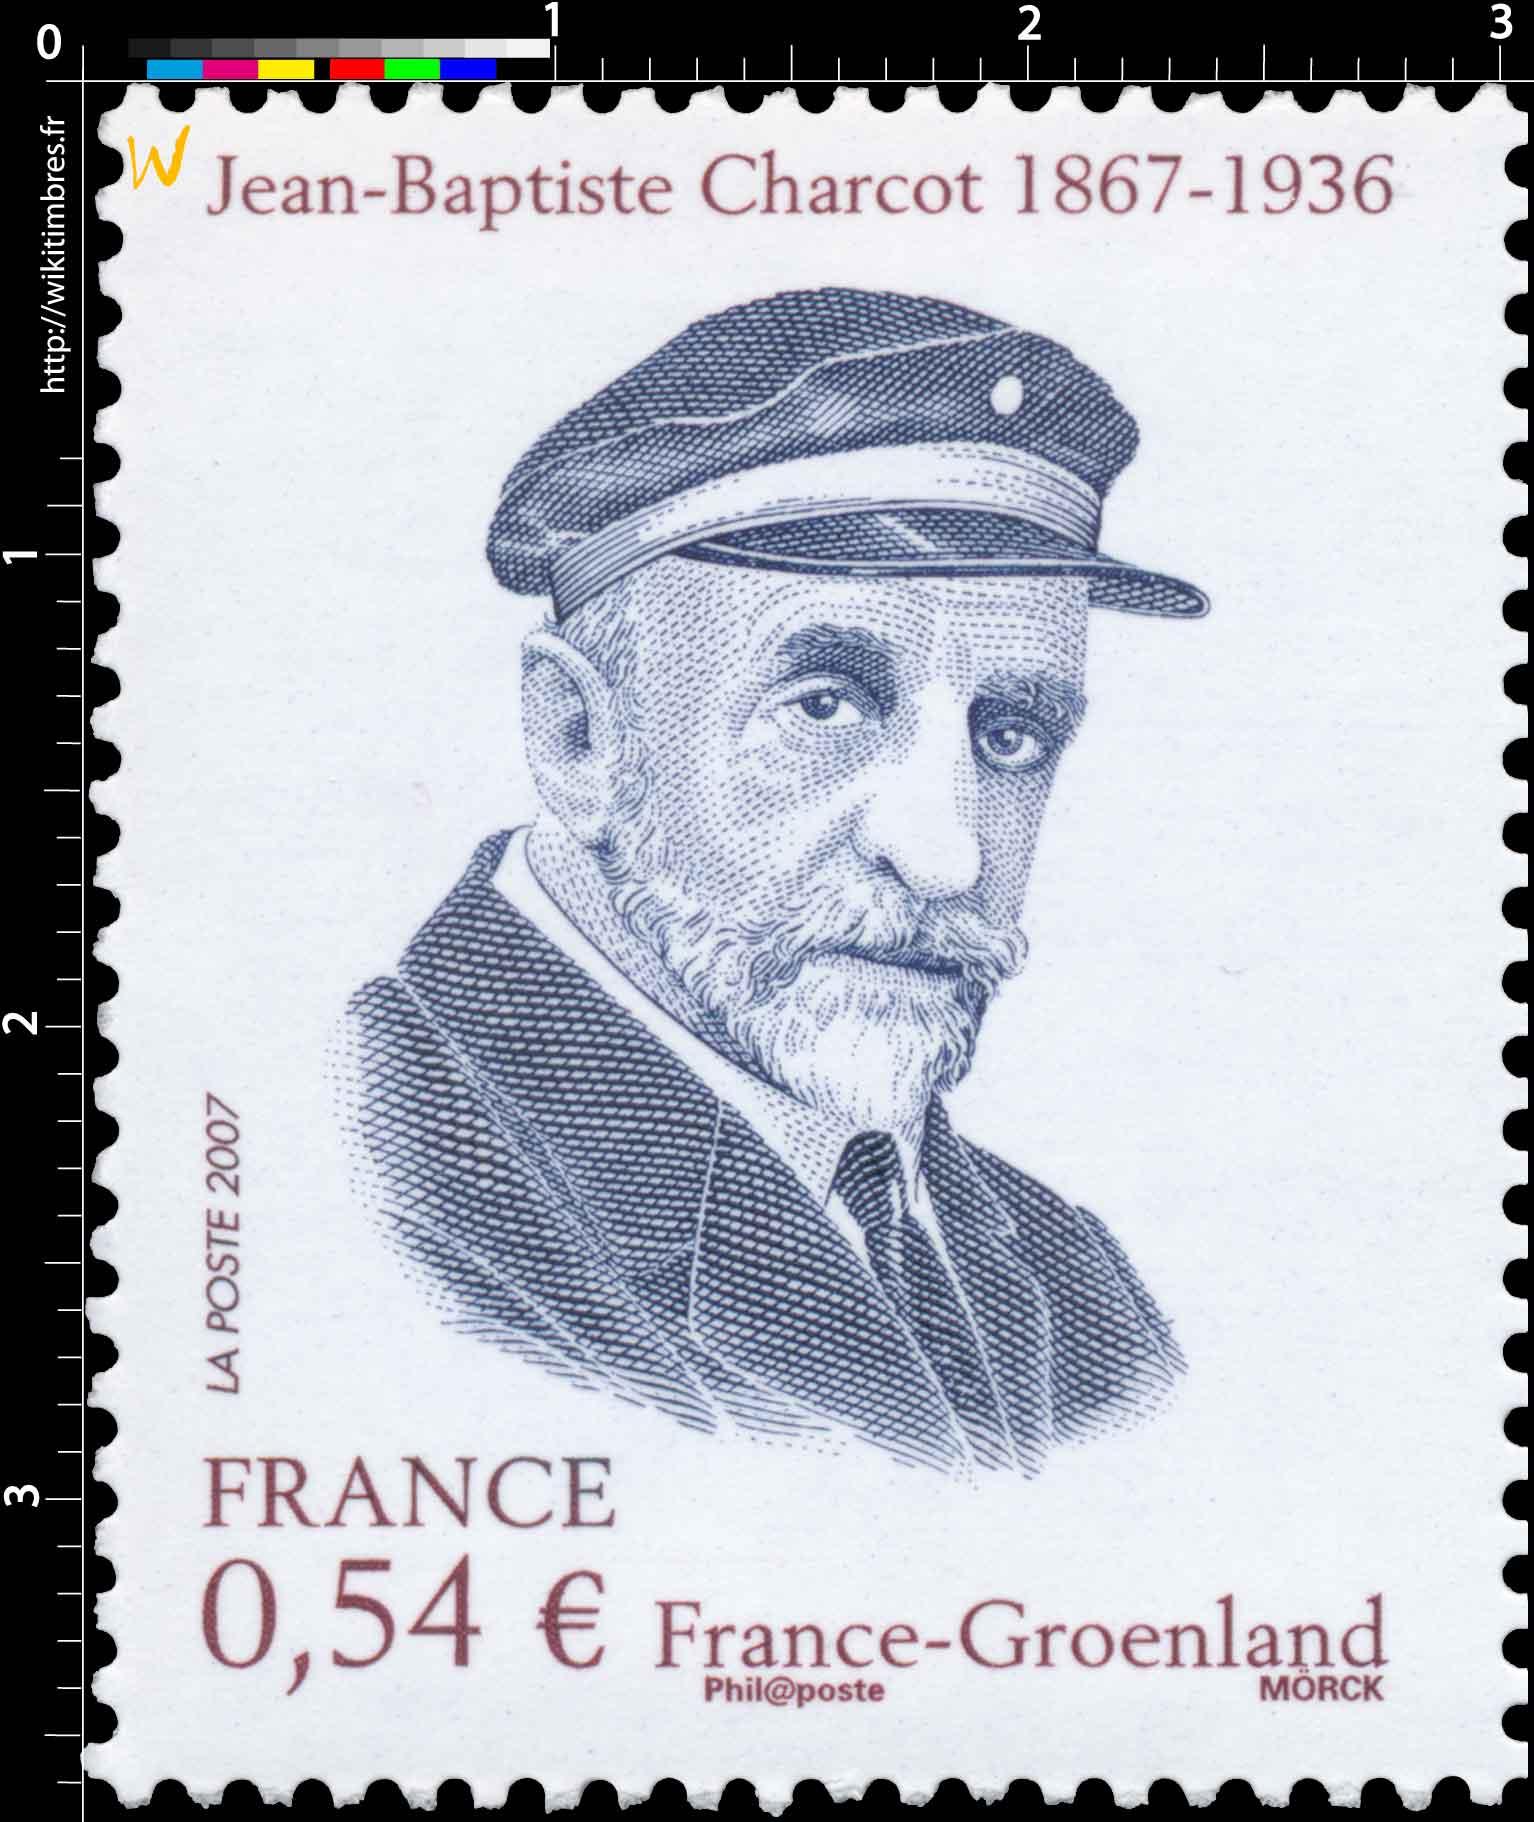 2007 Jean-Baptiste Charcot 1867-1936 France-Groenland